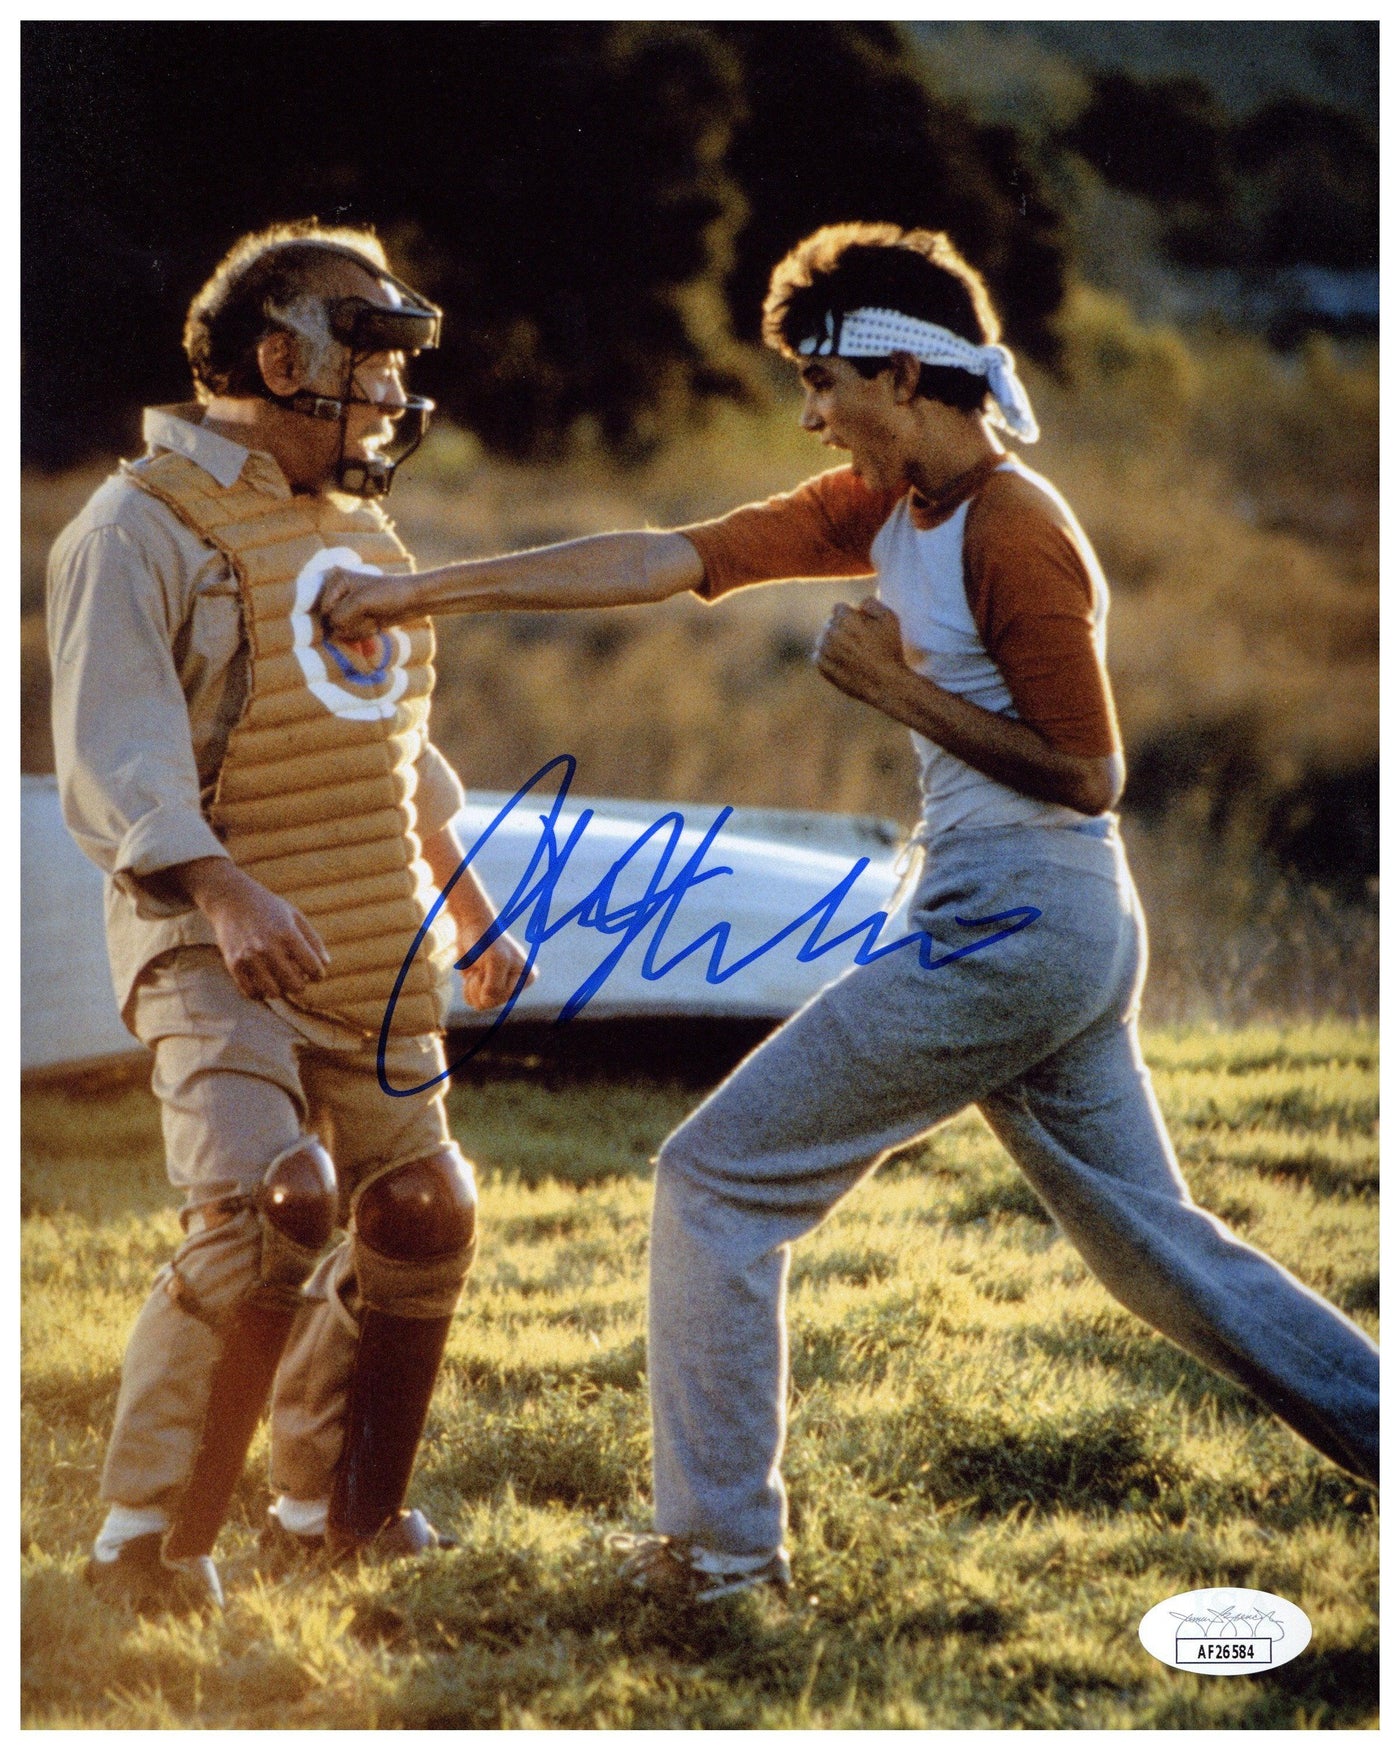 Ralph Macchio Signed 8x10 Photo Cobra Kai The Karate Kid Autographed JSA #2